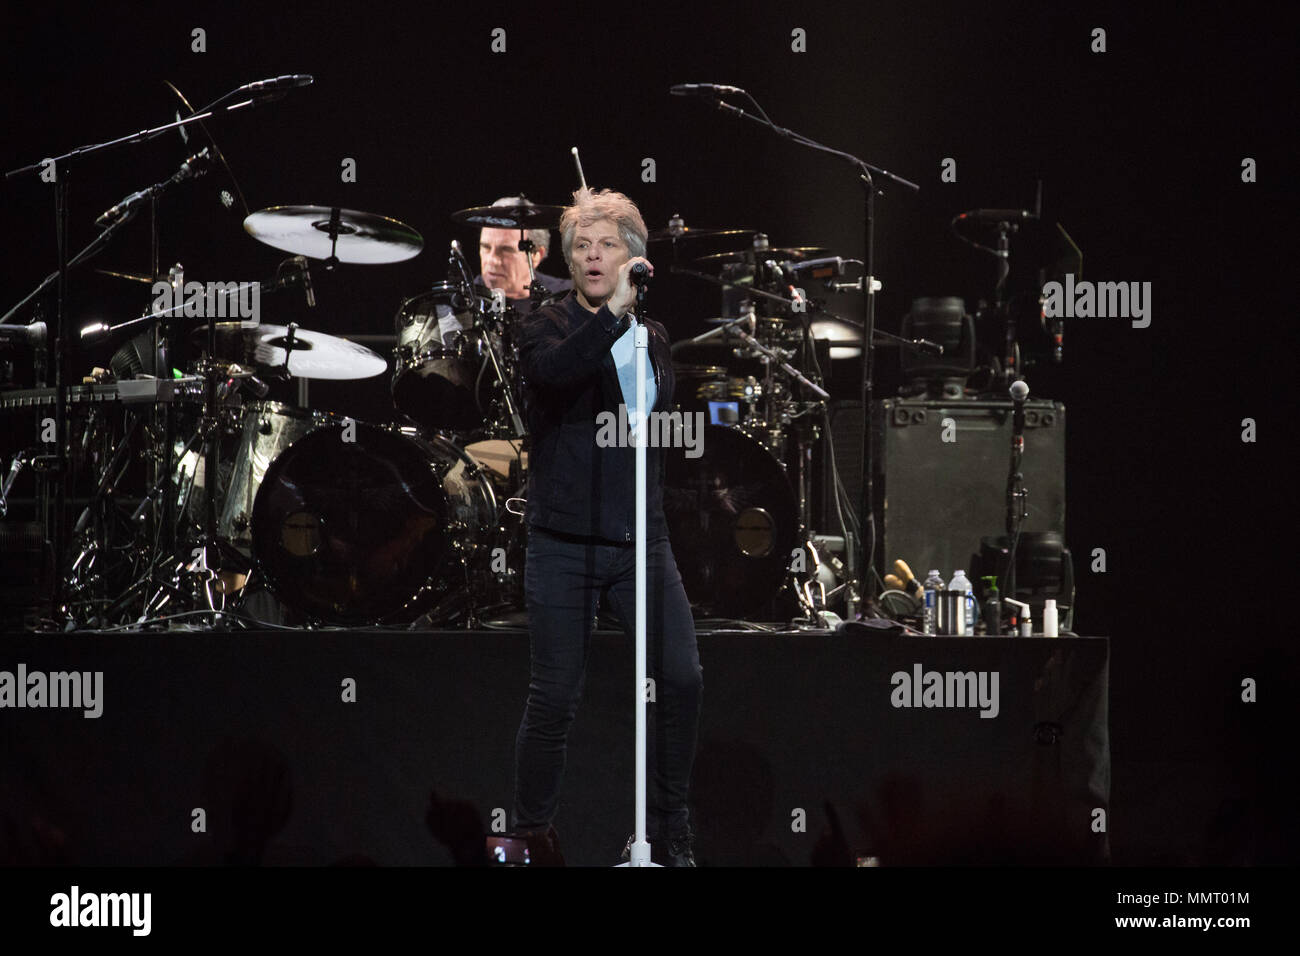 Toronto, CANADA. 12th May, 2018. Jon Bon Jovi performs at the Air Canada Centre in Toronto. Credit: Bobby Singh/Alamy Live News. Stock Photo